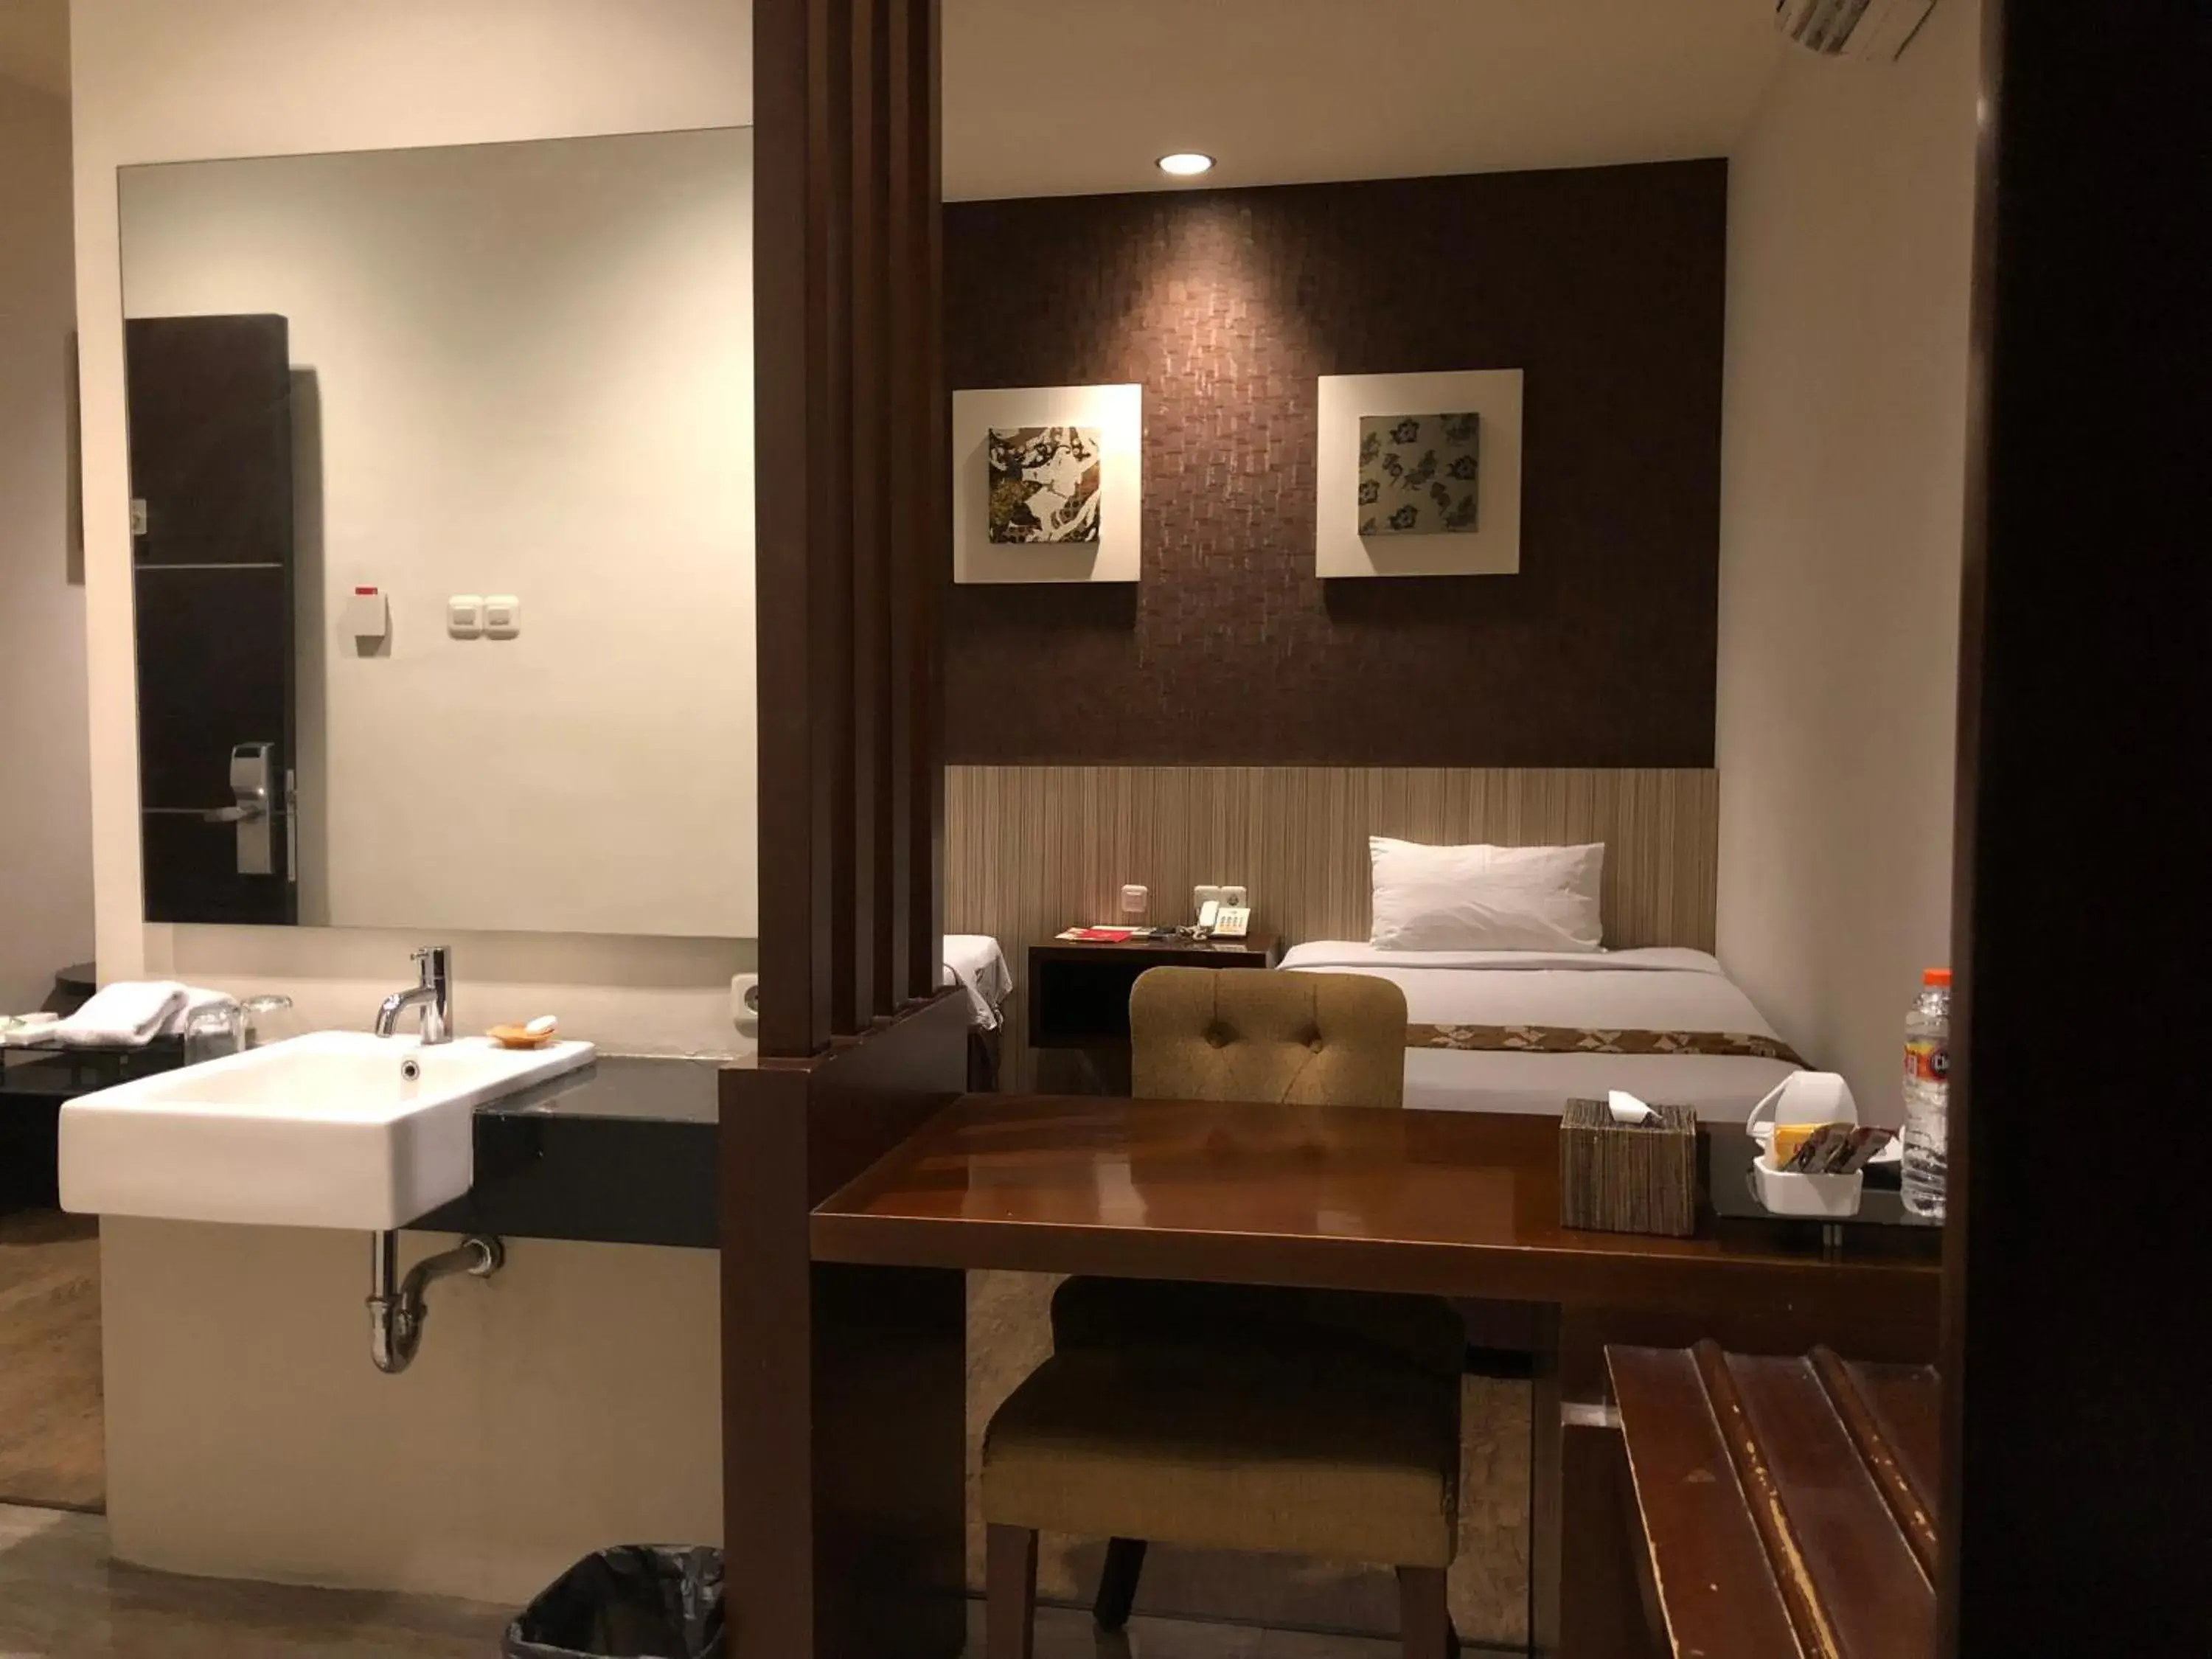 Coffee/tea facilities, Bathroom in Hotel Sinar 1